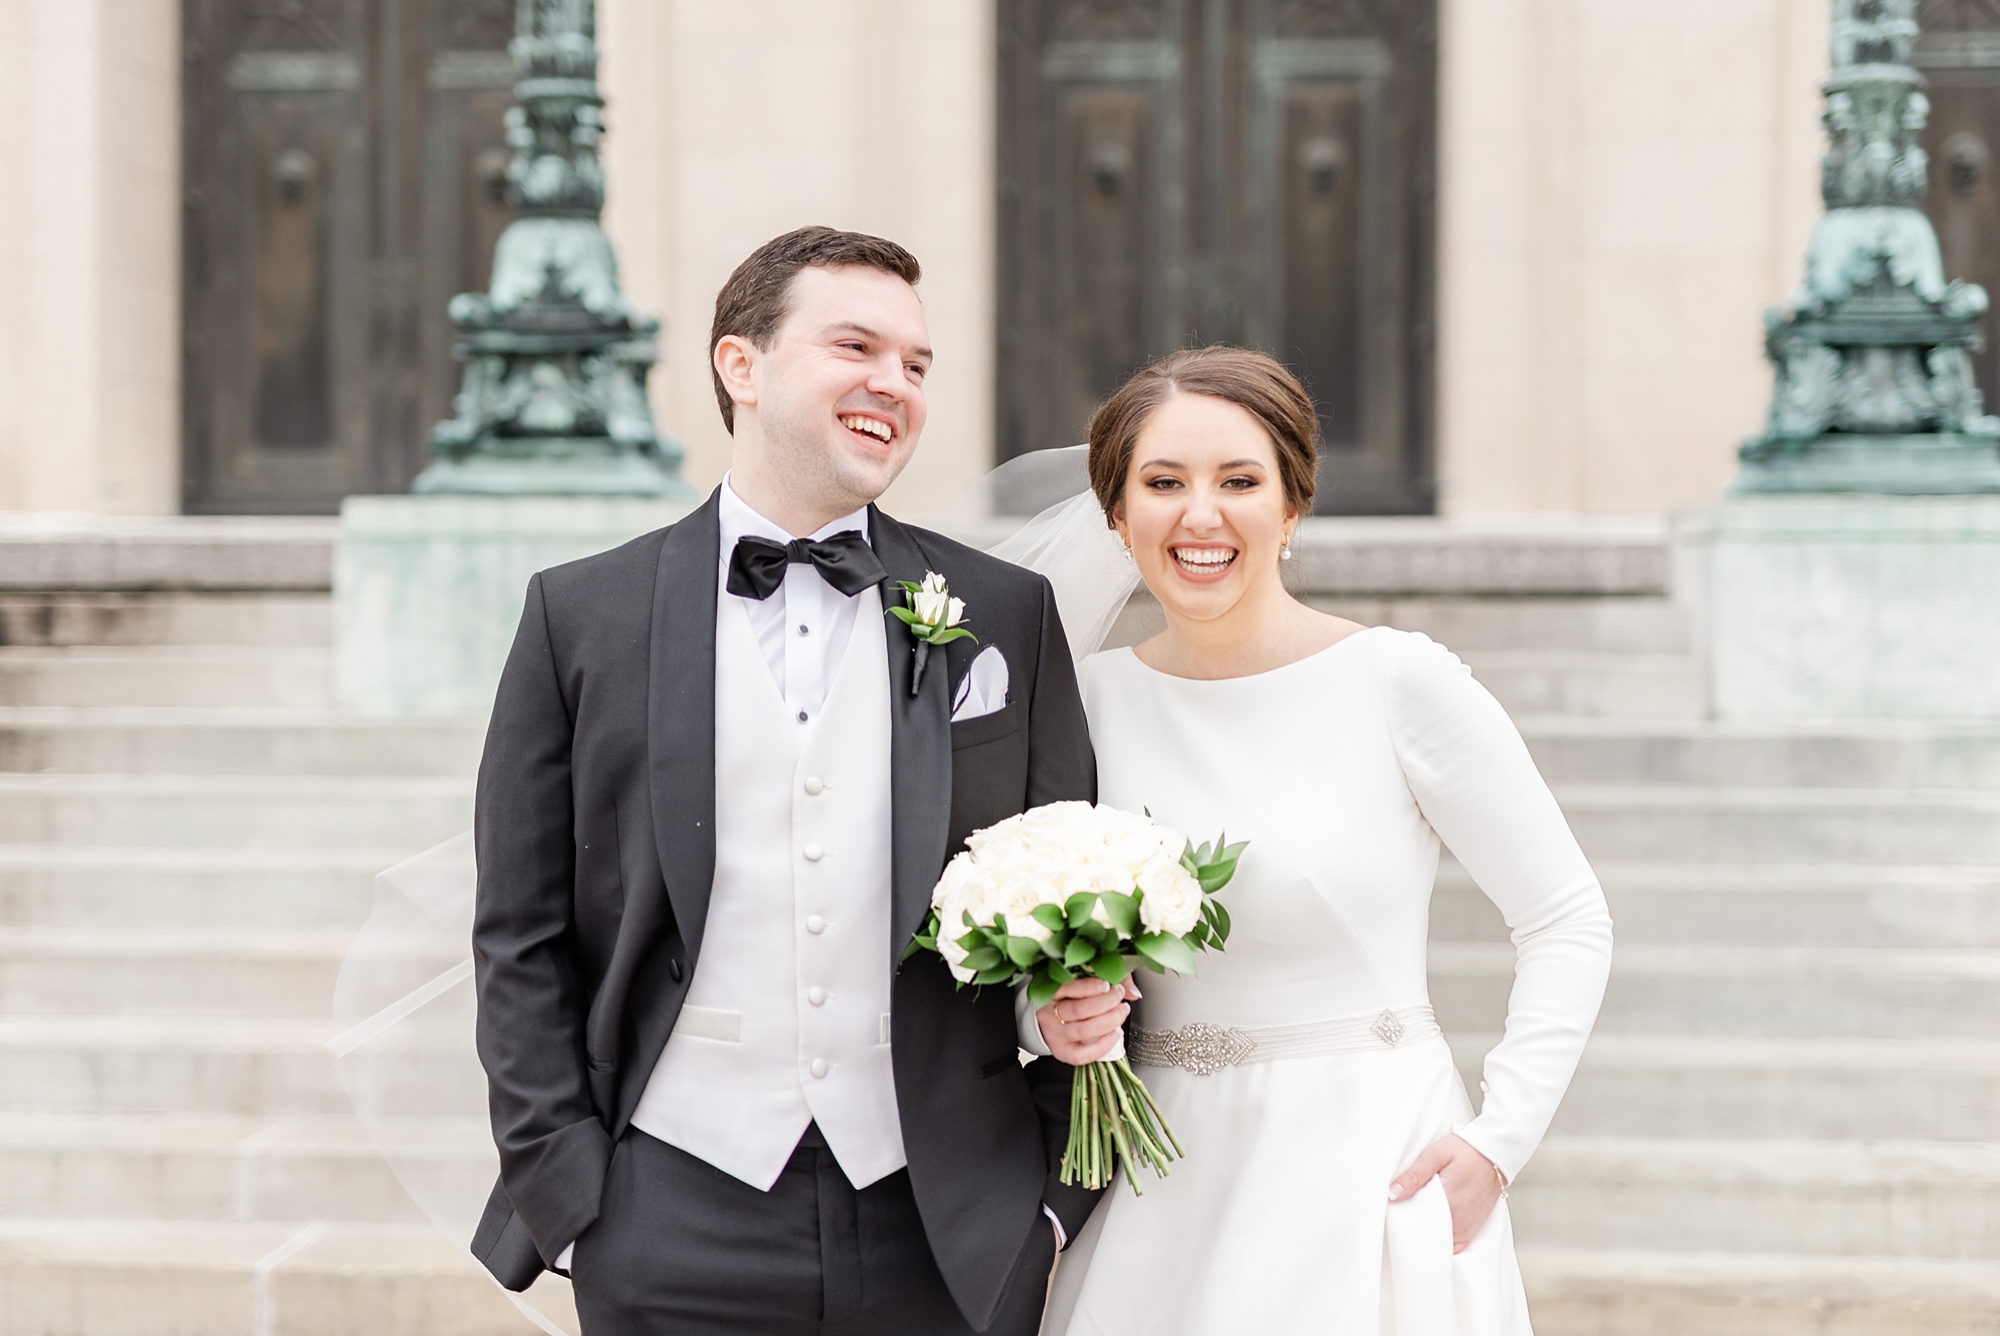 Dayton Masonic Center wedding portraits of classic bride and groom